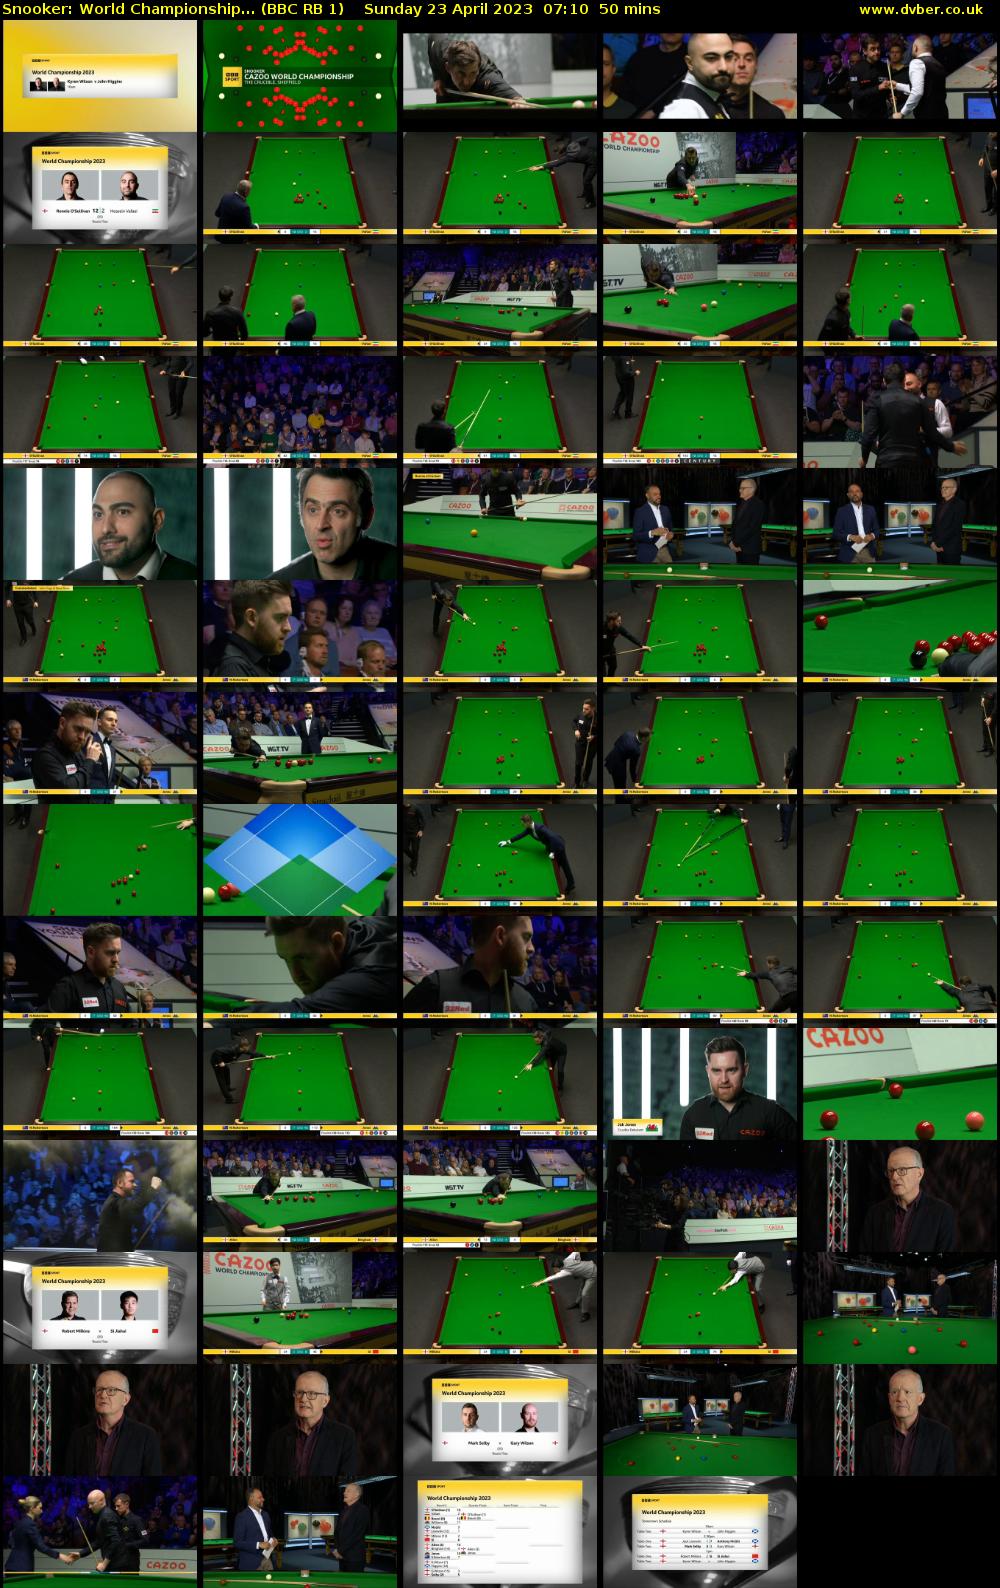 Snooker: World Championship... (BBC RB 1) Sunday 23 April 2023 07:10 - 08:00